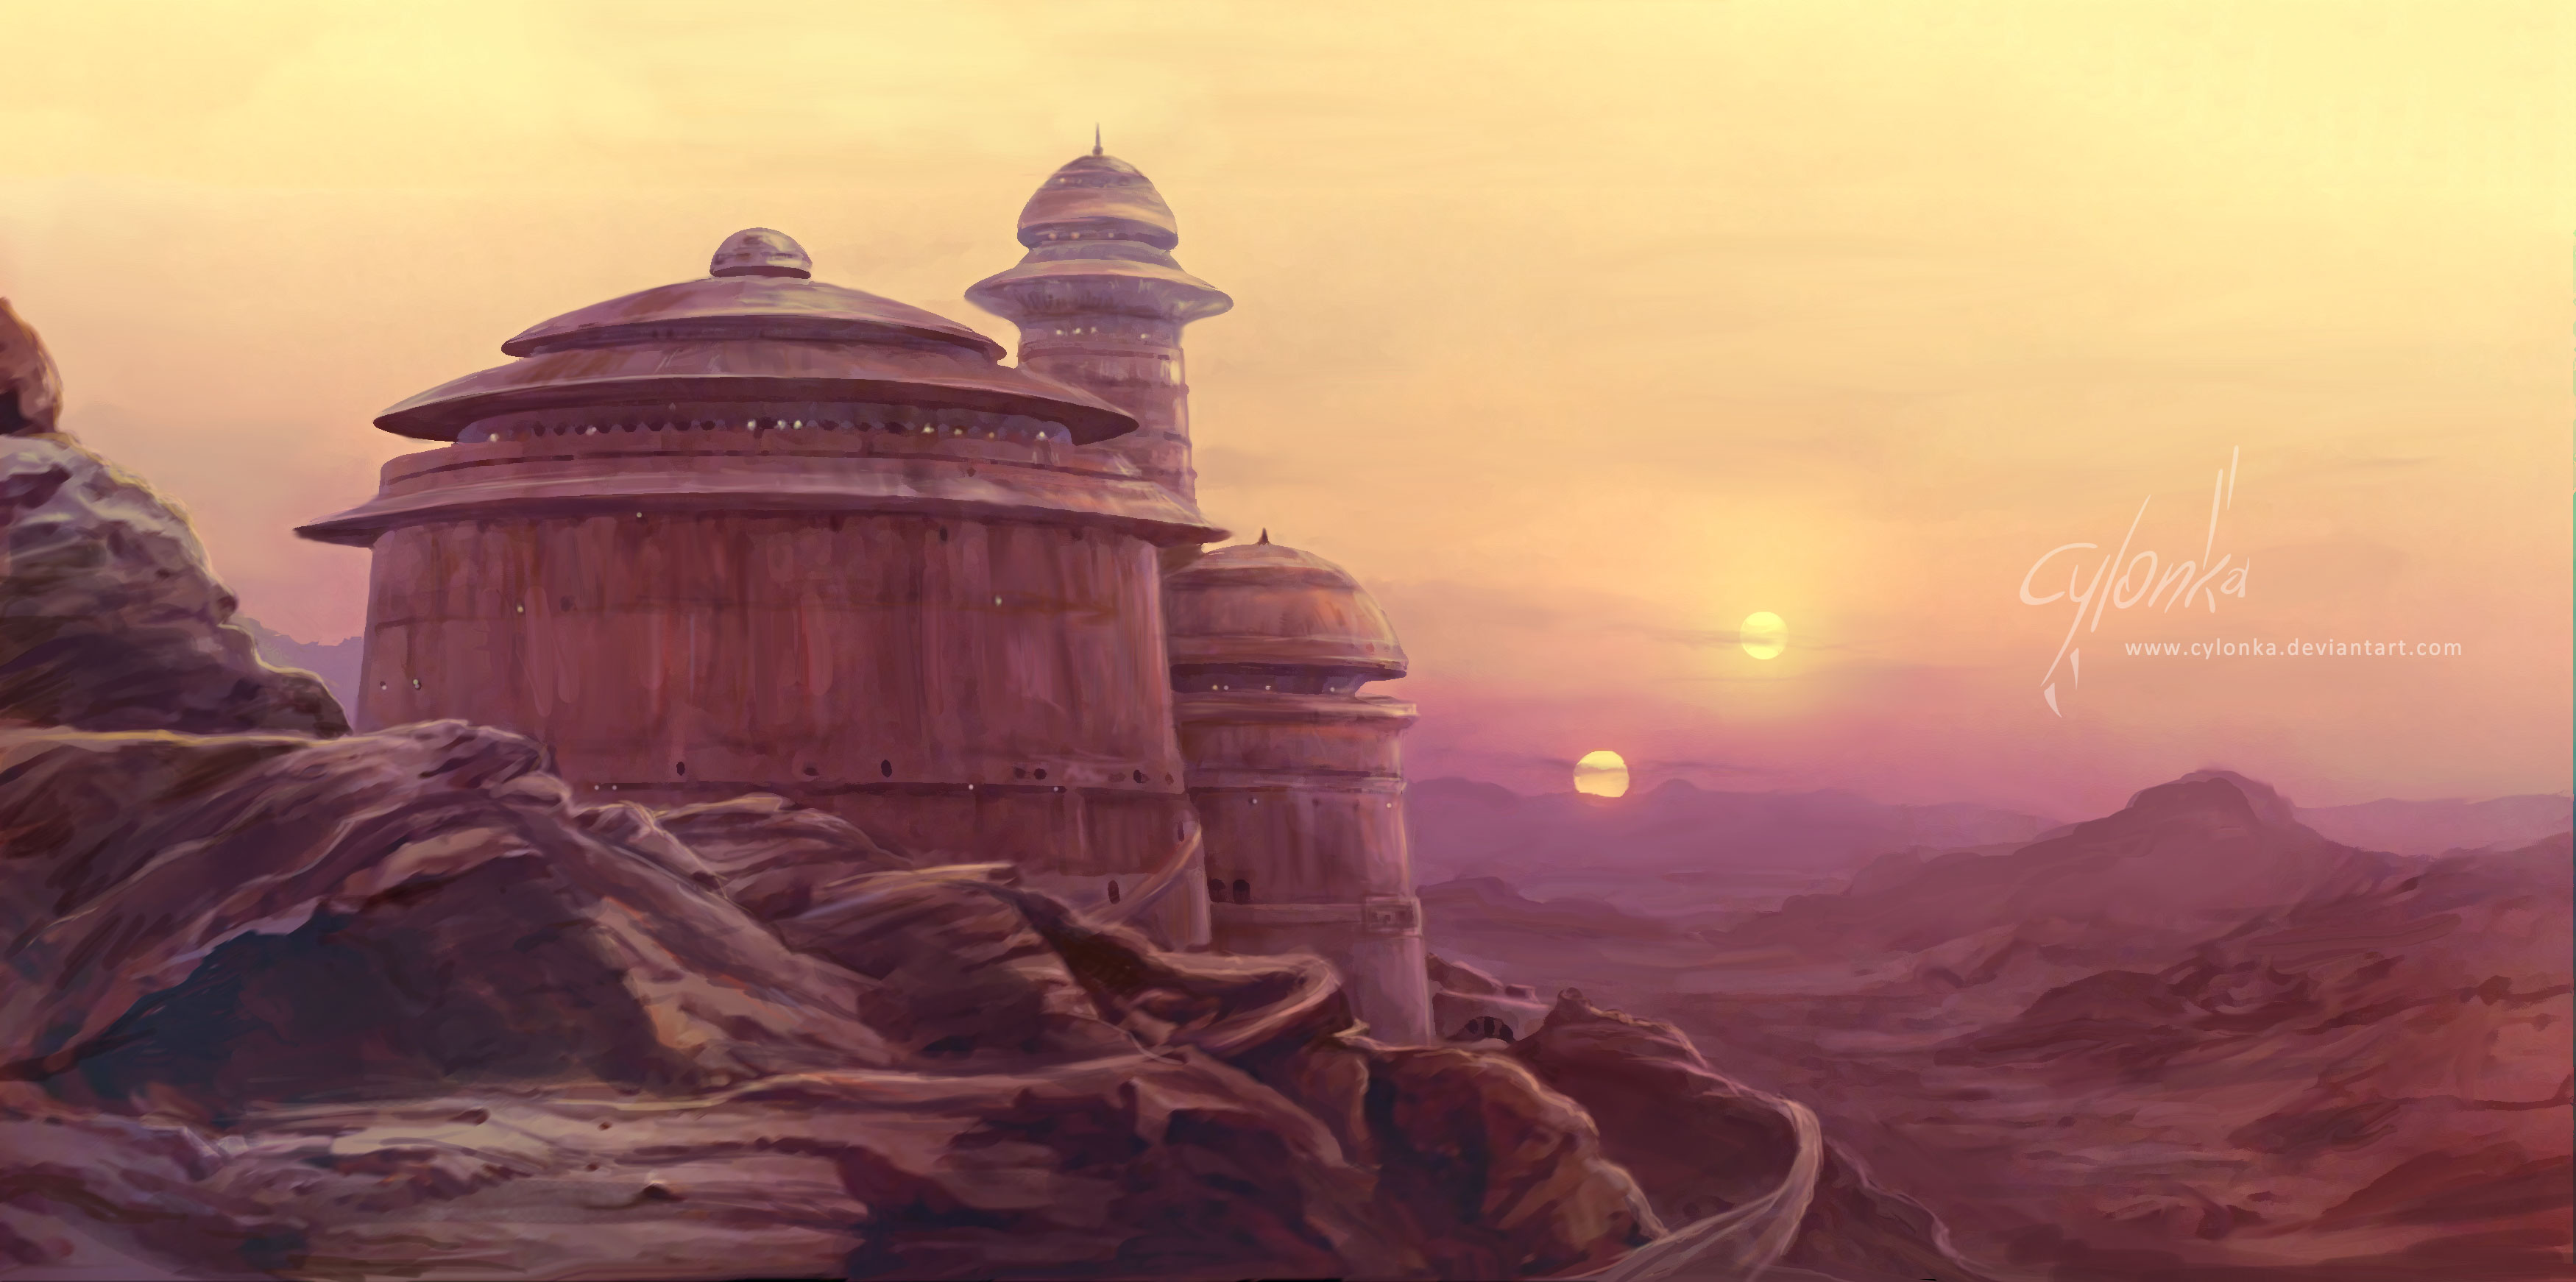 Tatooine wallpaper